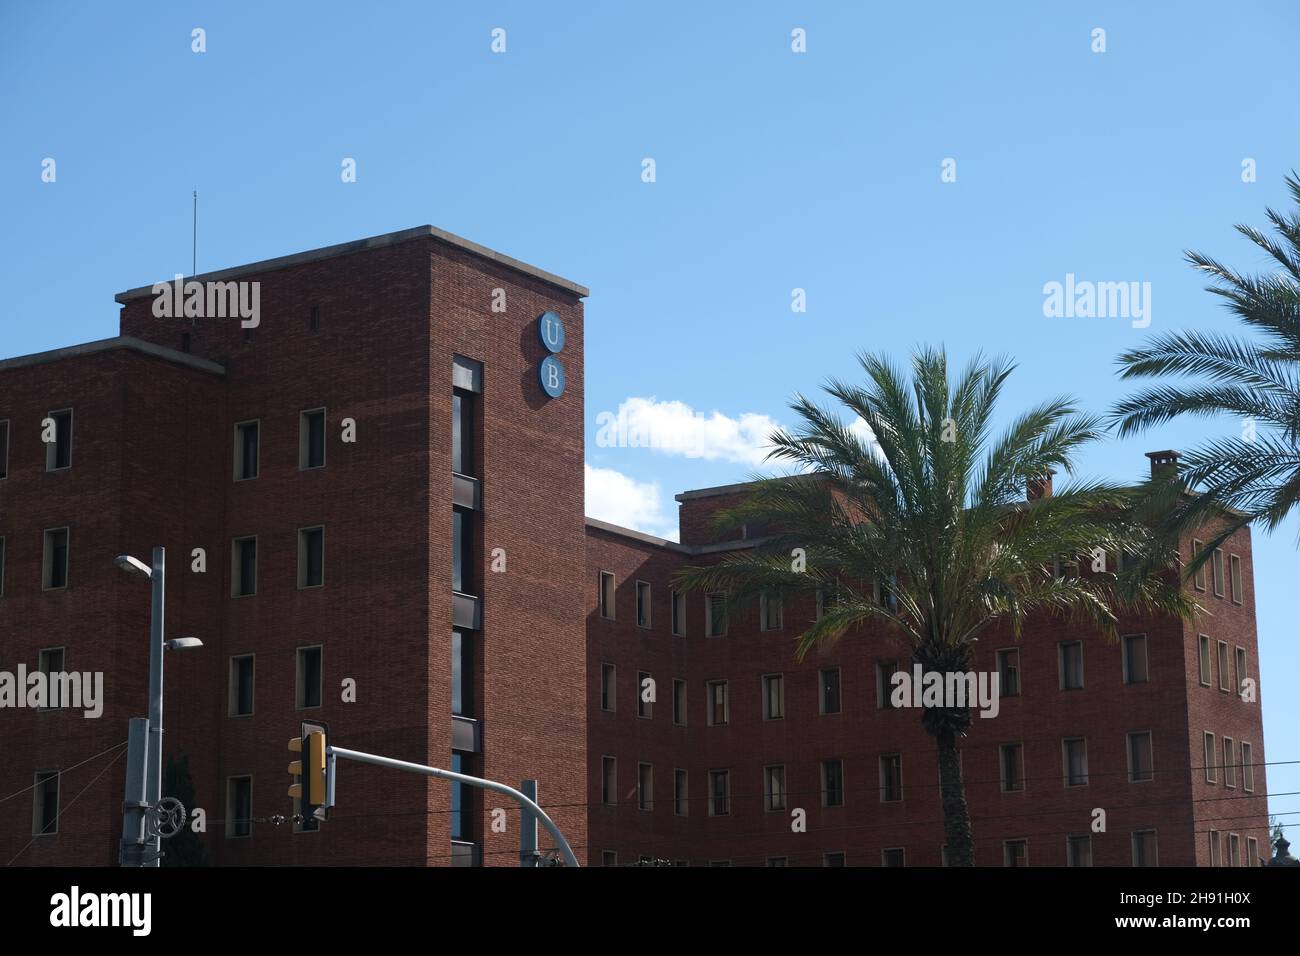 Barcelona, España - 5 de noviembre de 2021: Edificio de la Universidad de Barcelona o de la Universitat de Barcelona, Editorial Ilustrativa. Foto de stock